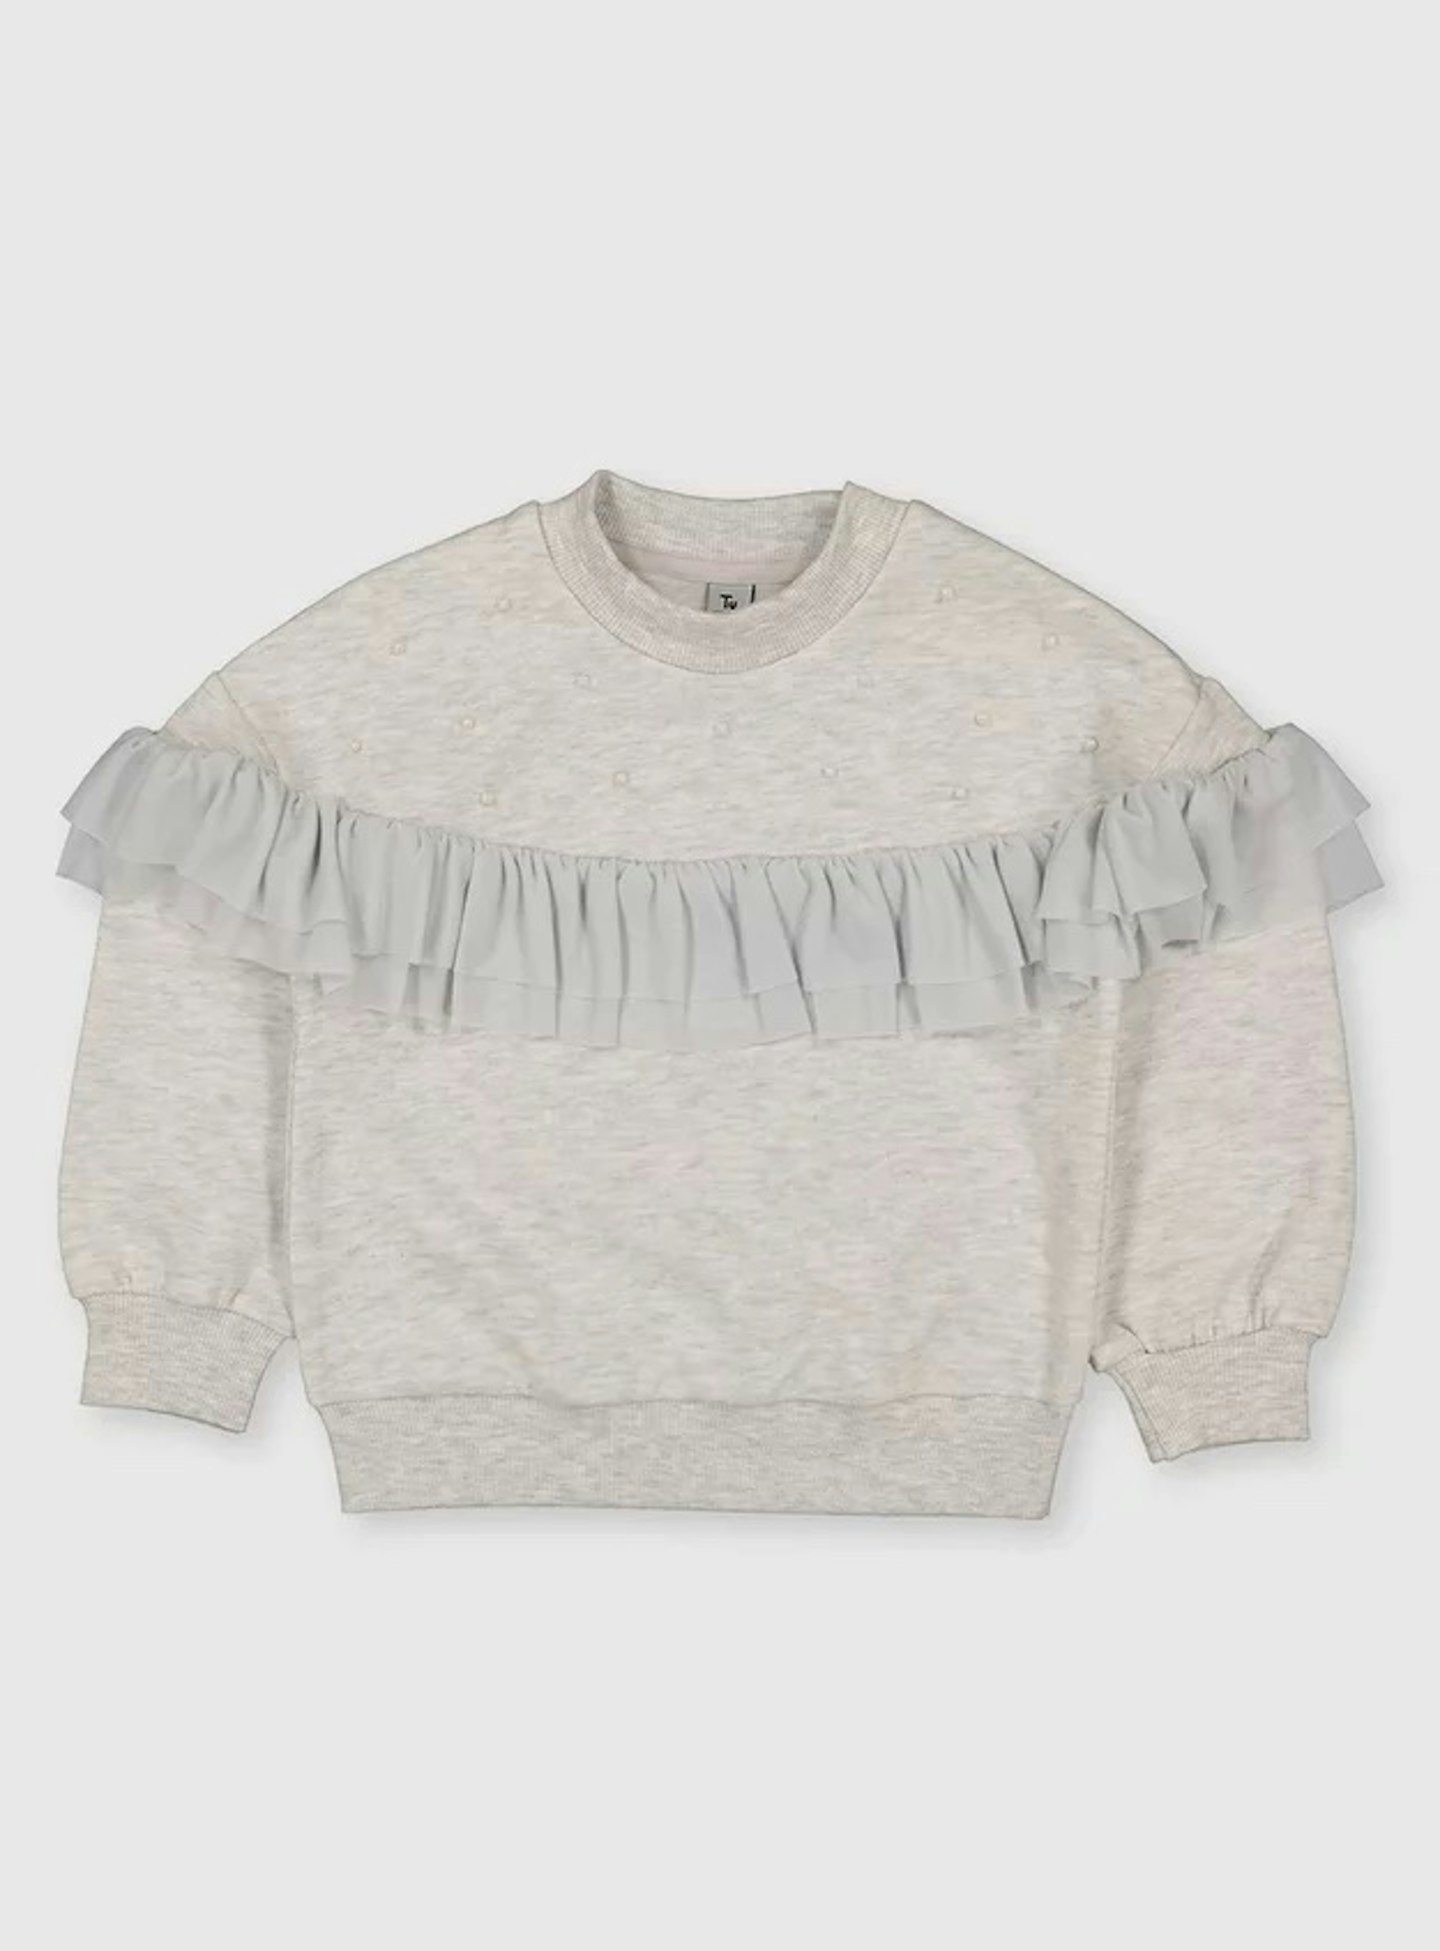 Grey Marl Frill & Faux Pearl Sweatshirt (3-14 Years), From £8.00